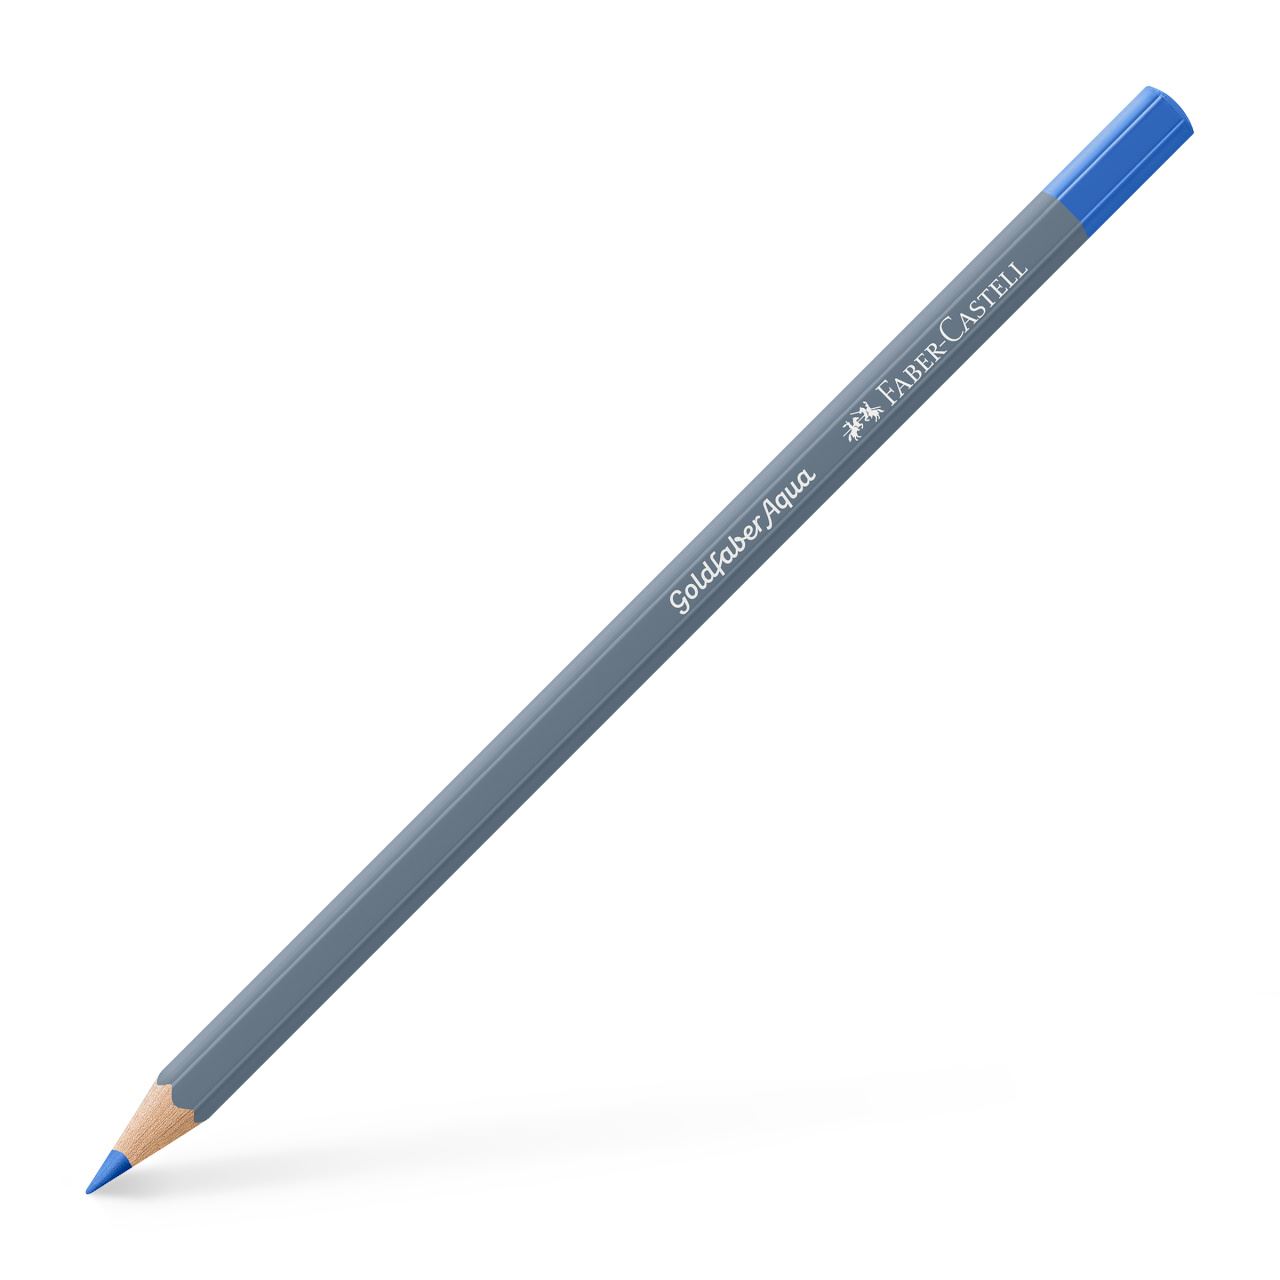 Faber-Castell - Goldfaber Aqua watercolour pencil, ultramarine